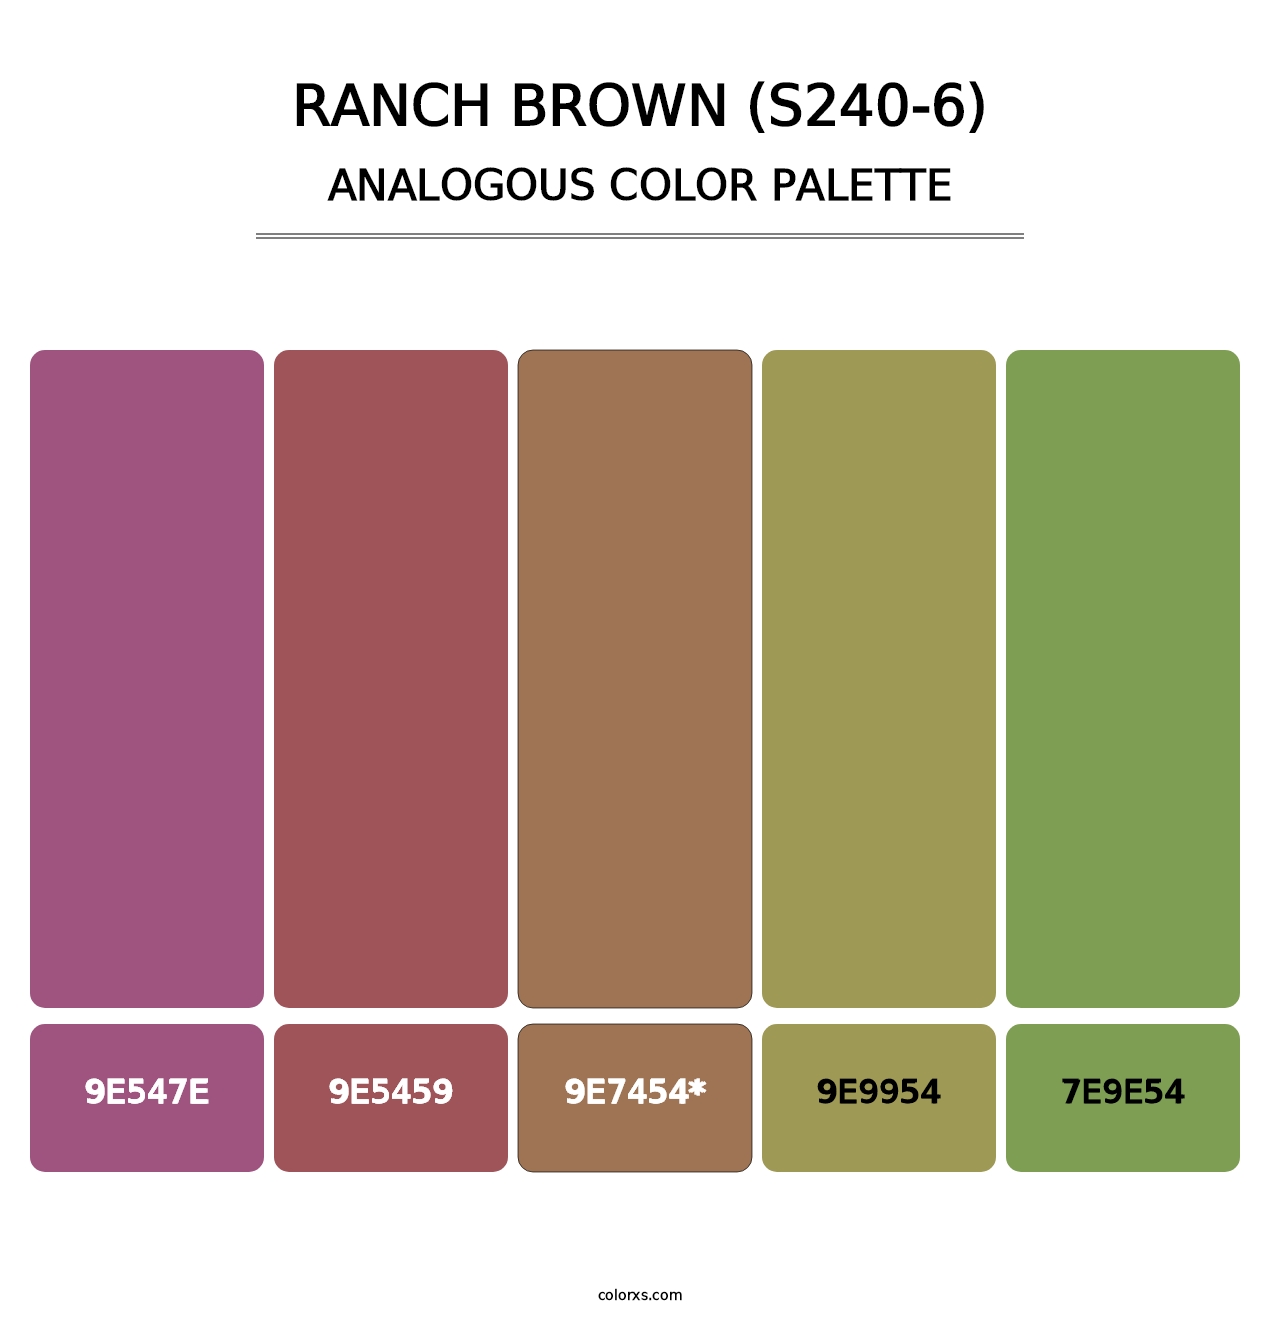 Ranch Brown (S240-6) - Analogous Color Palette